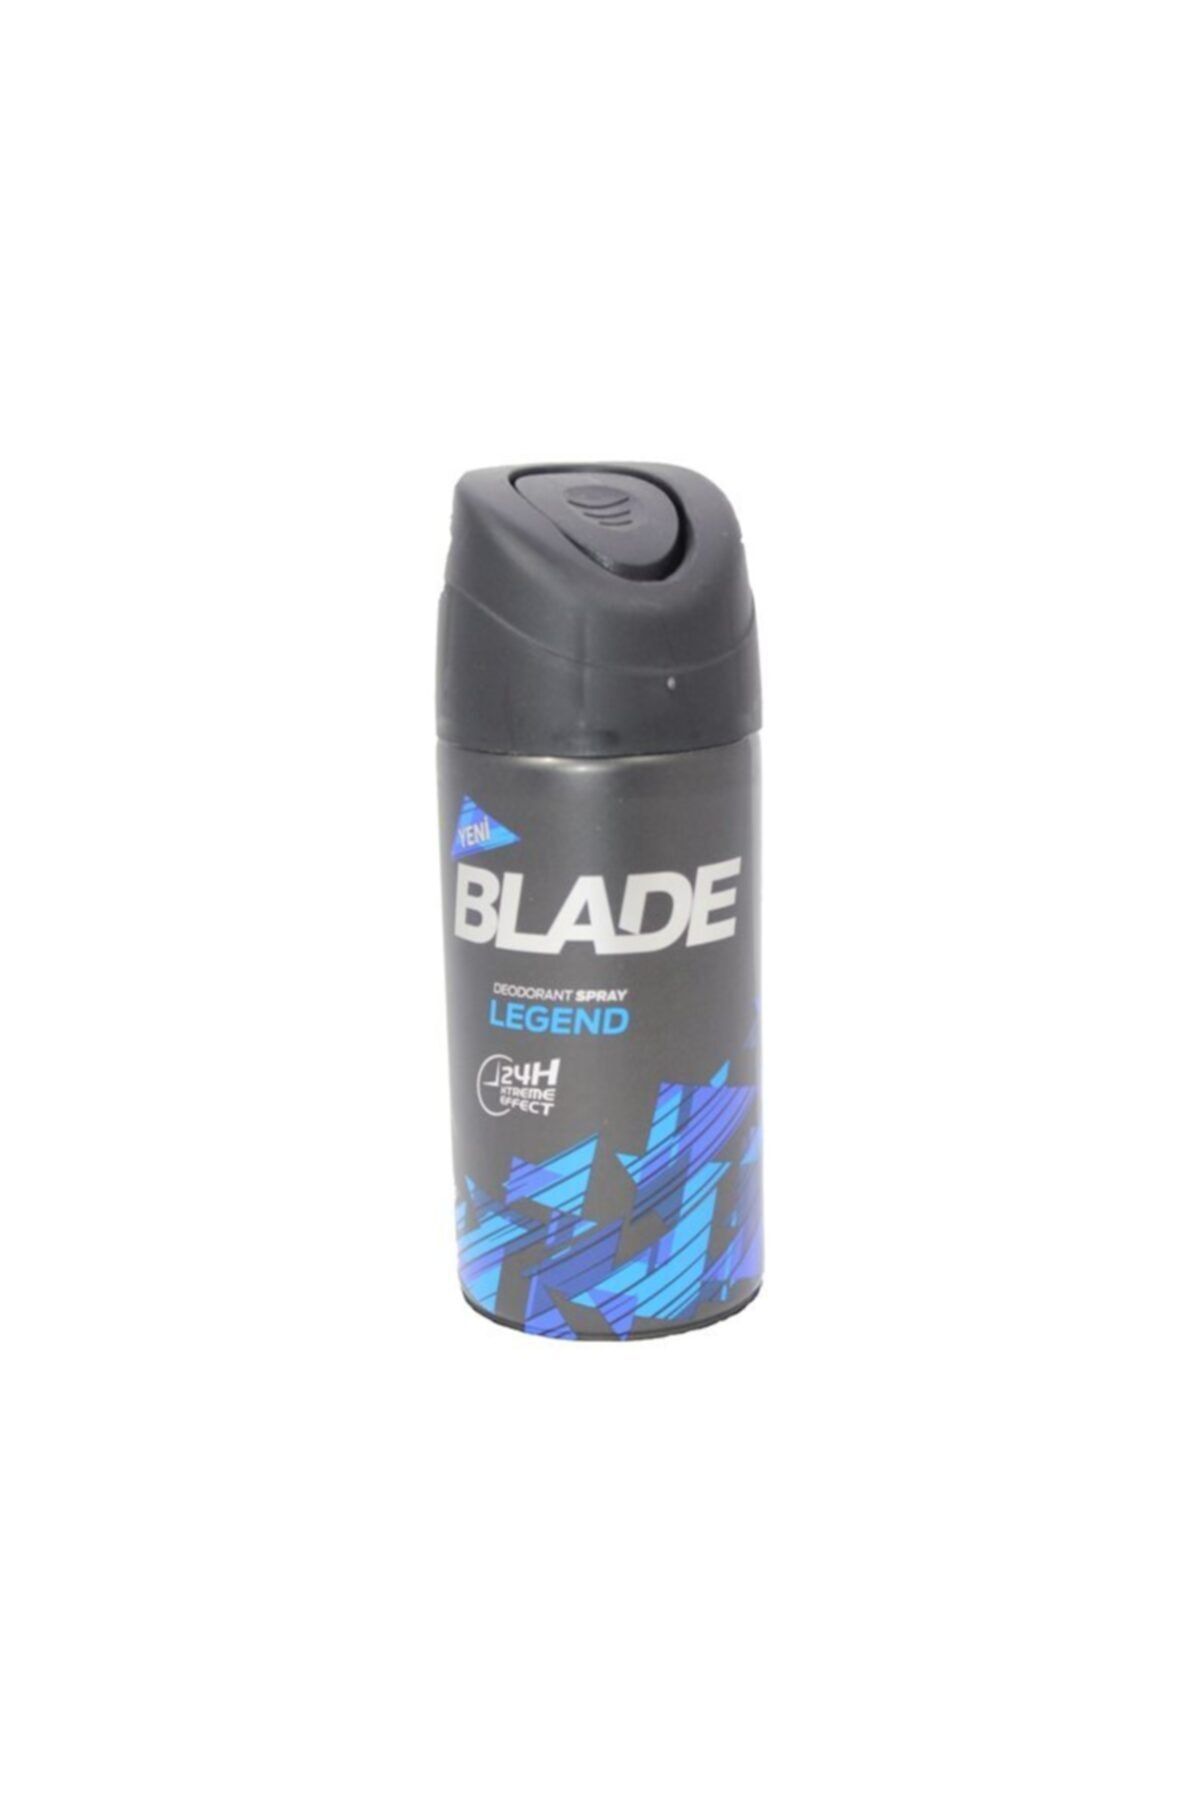 Blade Deodorant Legend 150ml